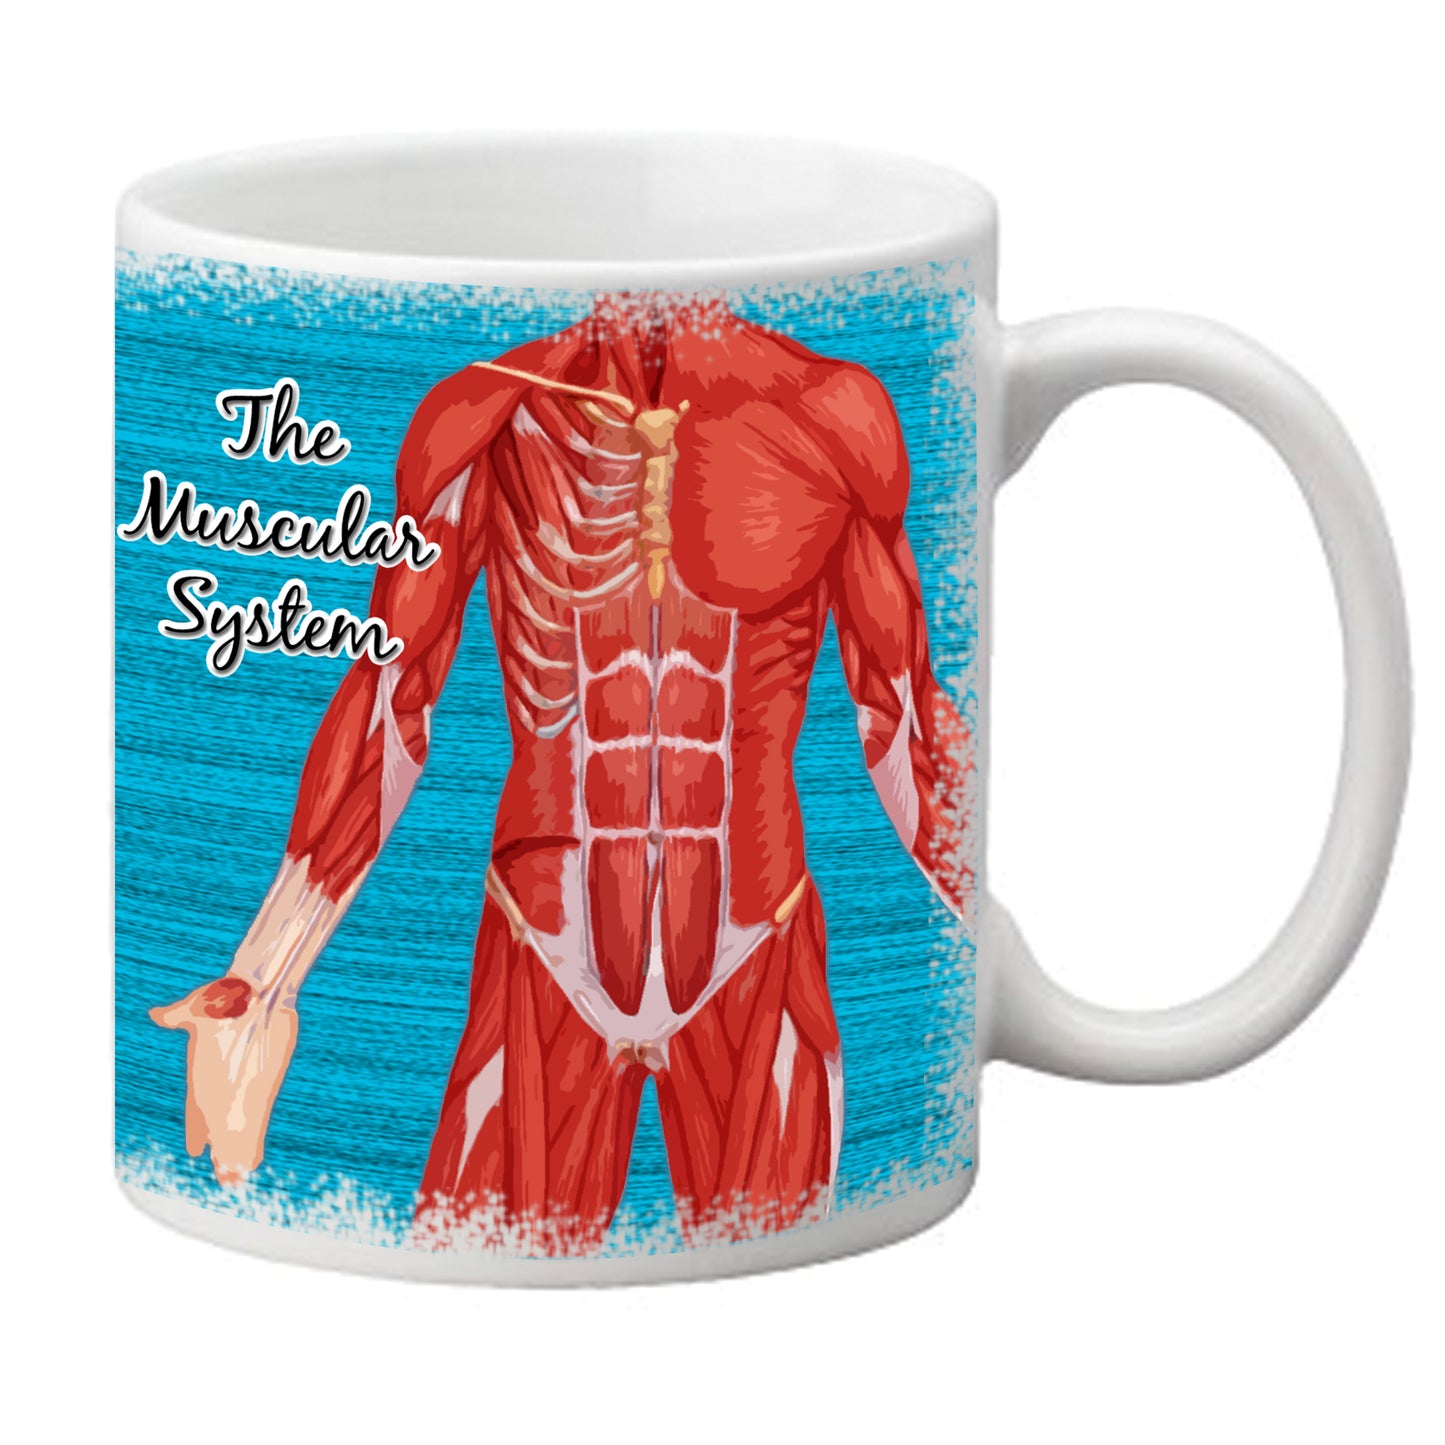 'The Muscular System' Mug